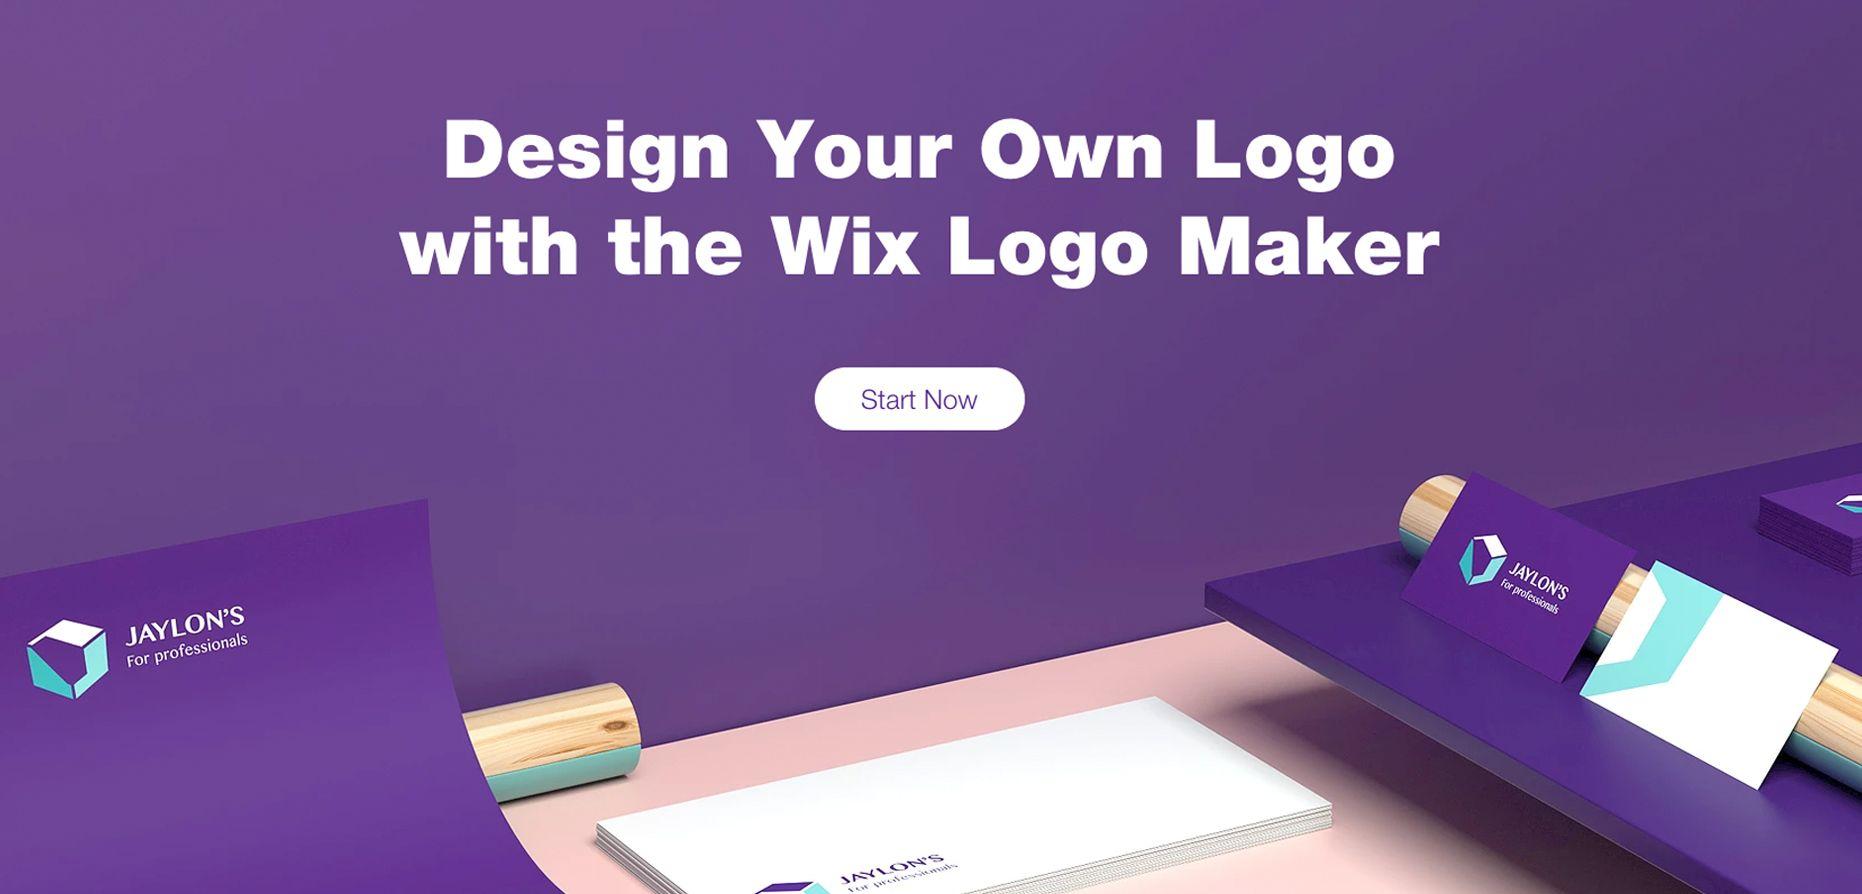 Design Your Own Business Logo - Logo Maker | Create Your Own Free Logo | Wix.com